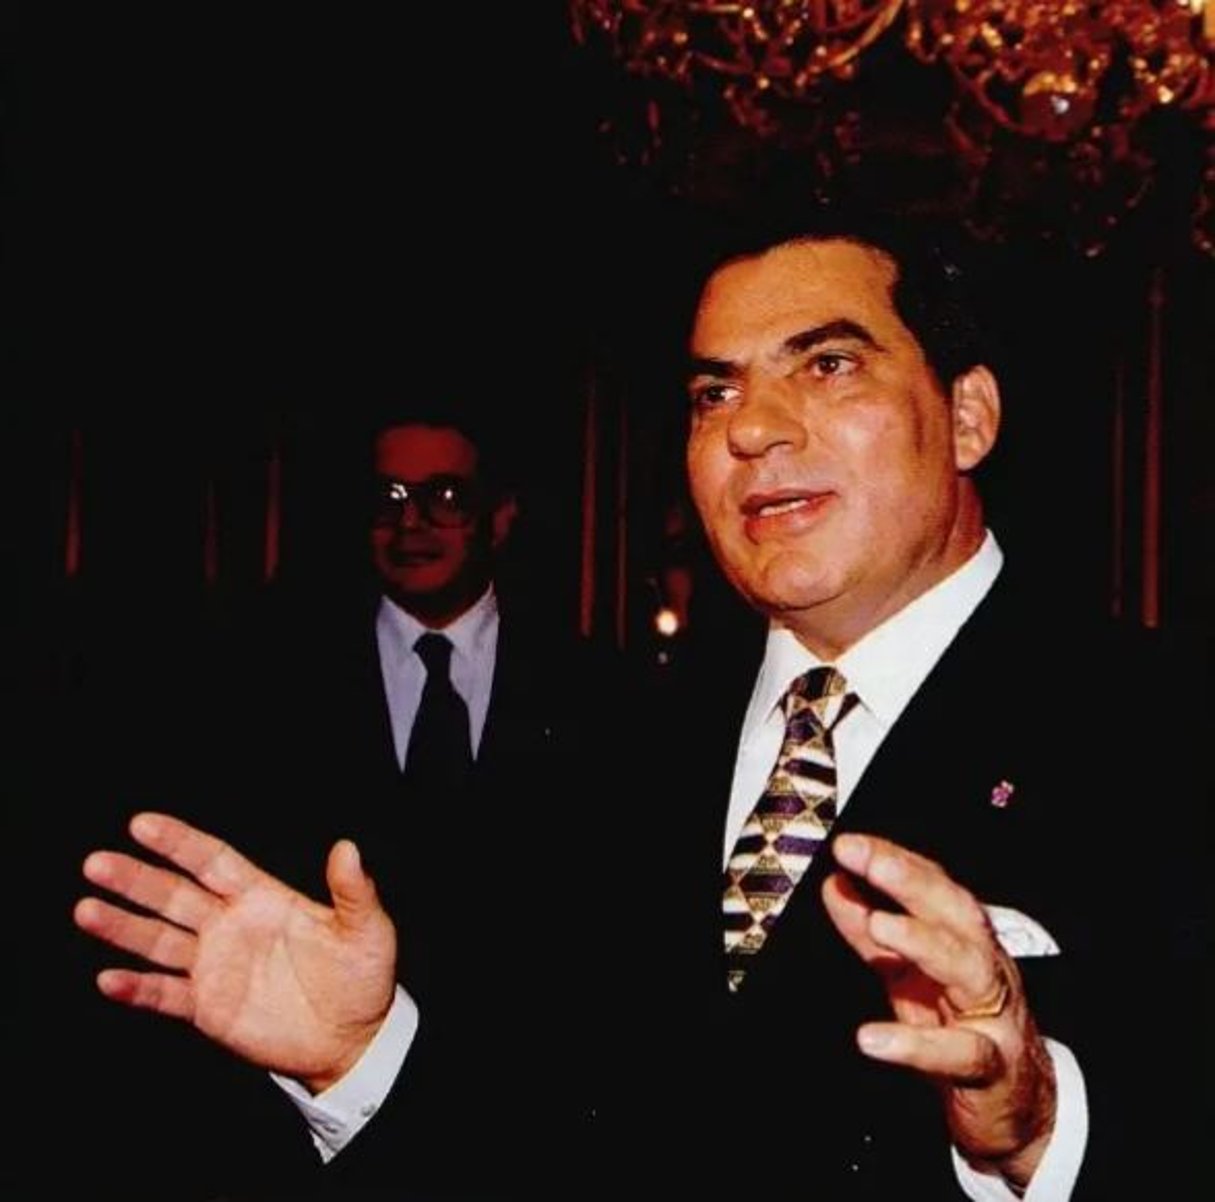 Zine el-Abidine Ben Ali, en octobre 1997 à Paris. © Archives JA